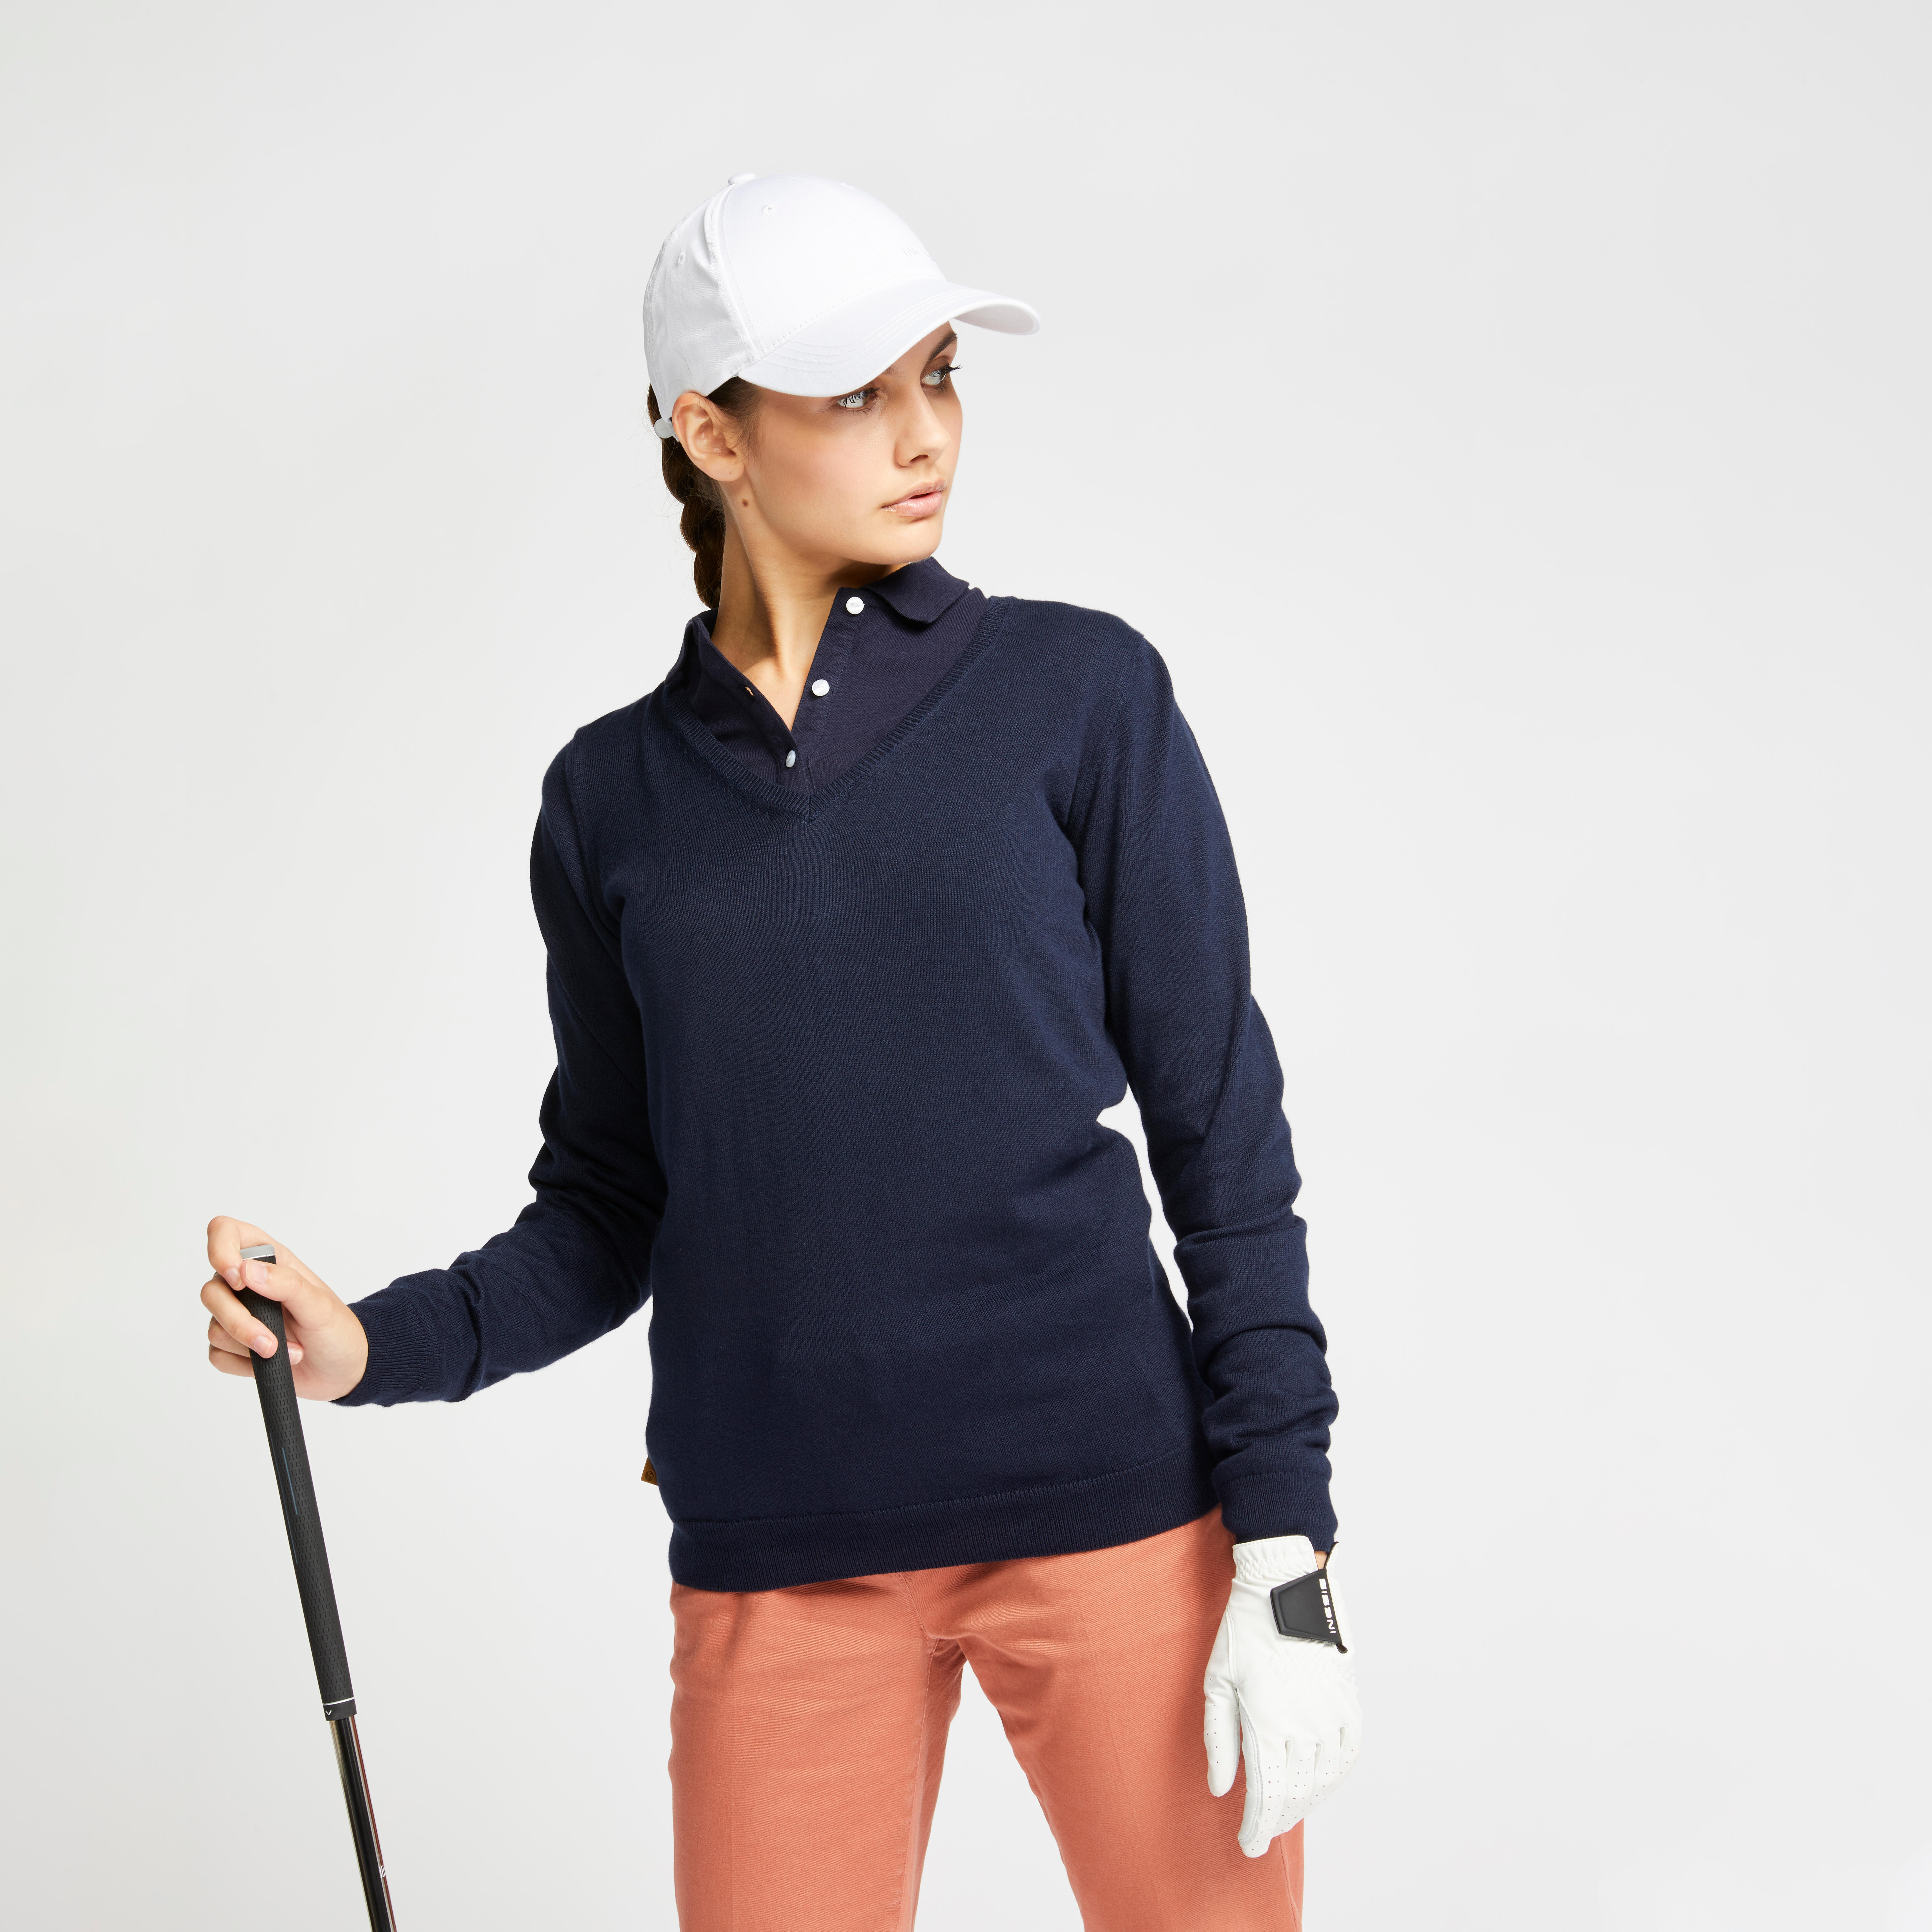 Women's Golf Sweater - MW 500 Blue - INESIS